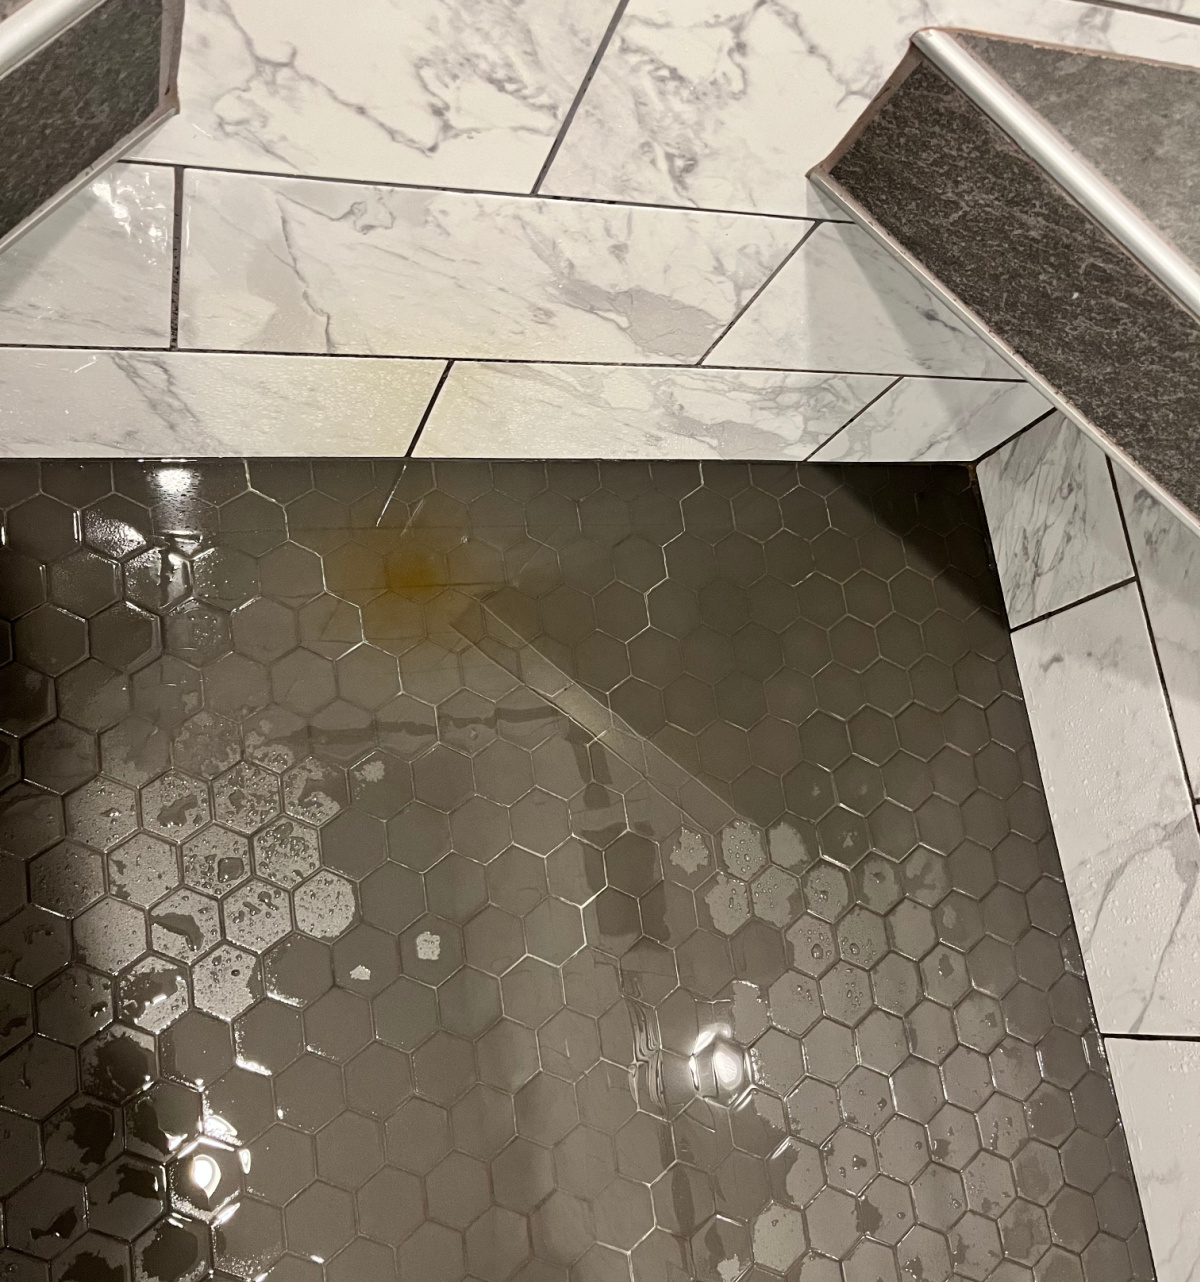 Water pooling on shower tiles on floor